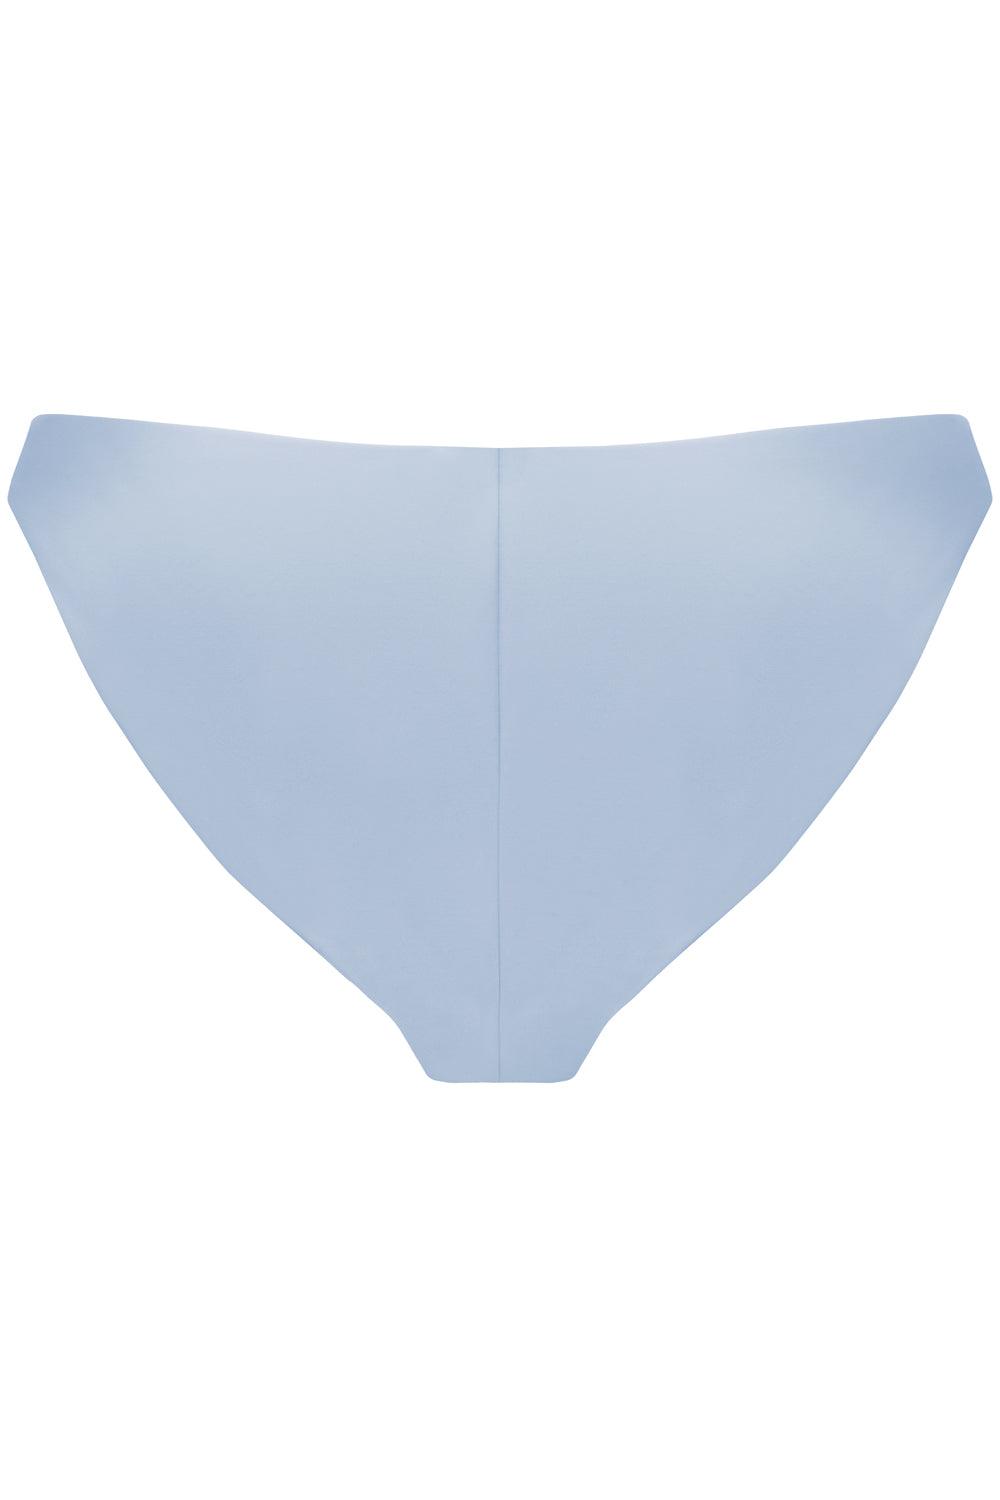 Radiya Sky bikini bottom - Bikini bottom by Keosme. Shop on yesUndress